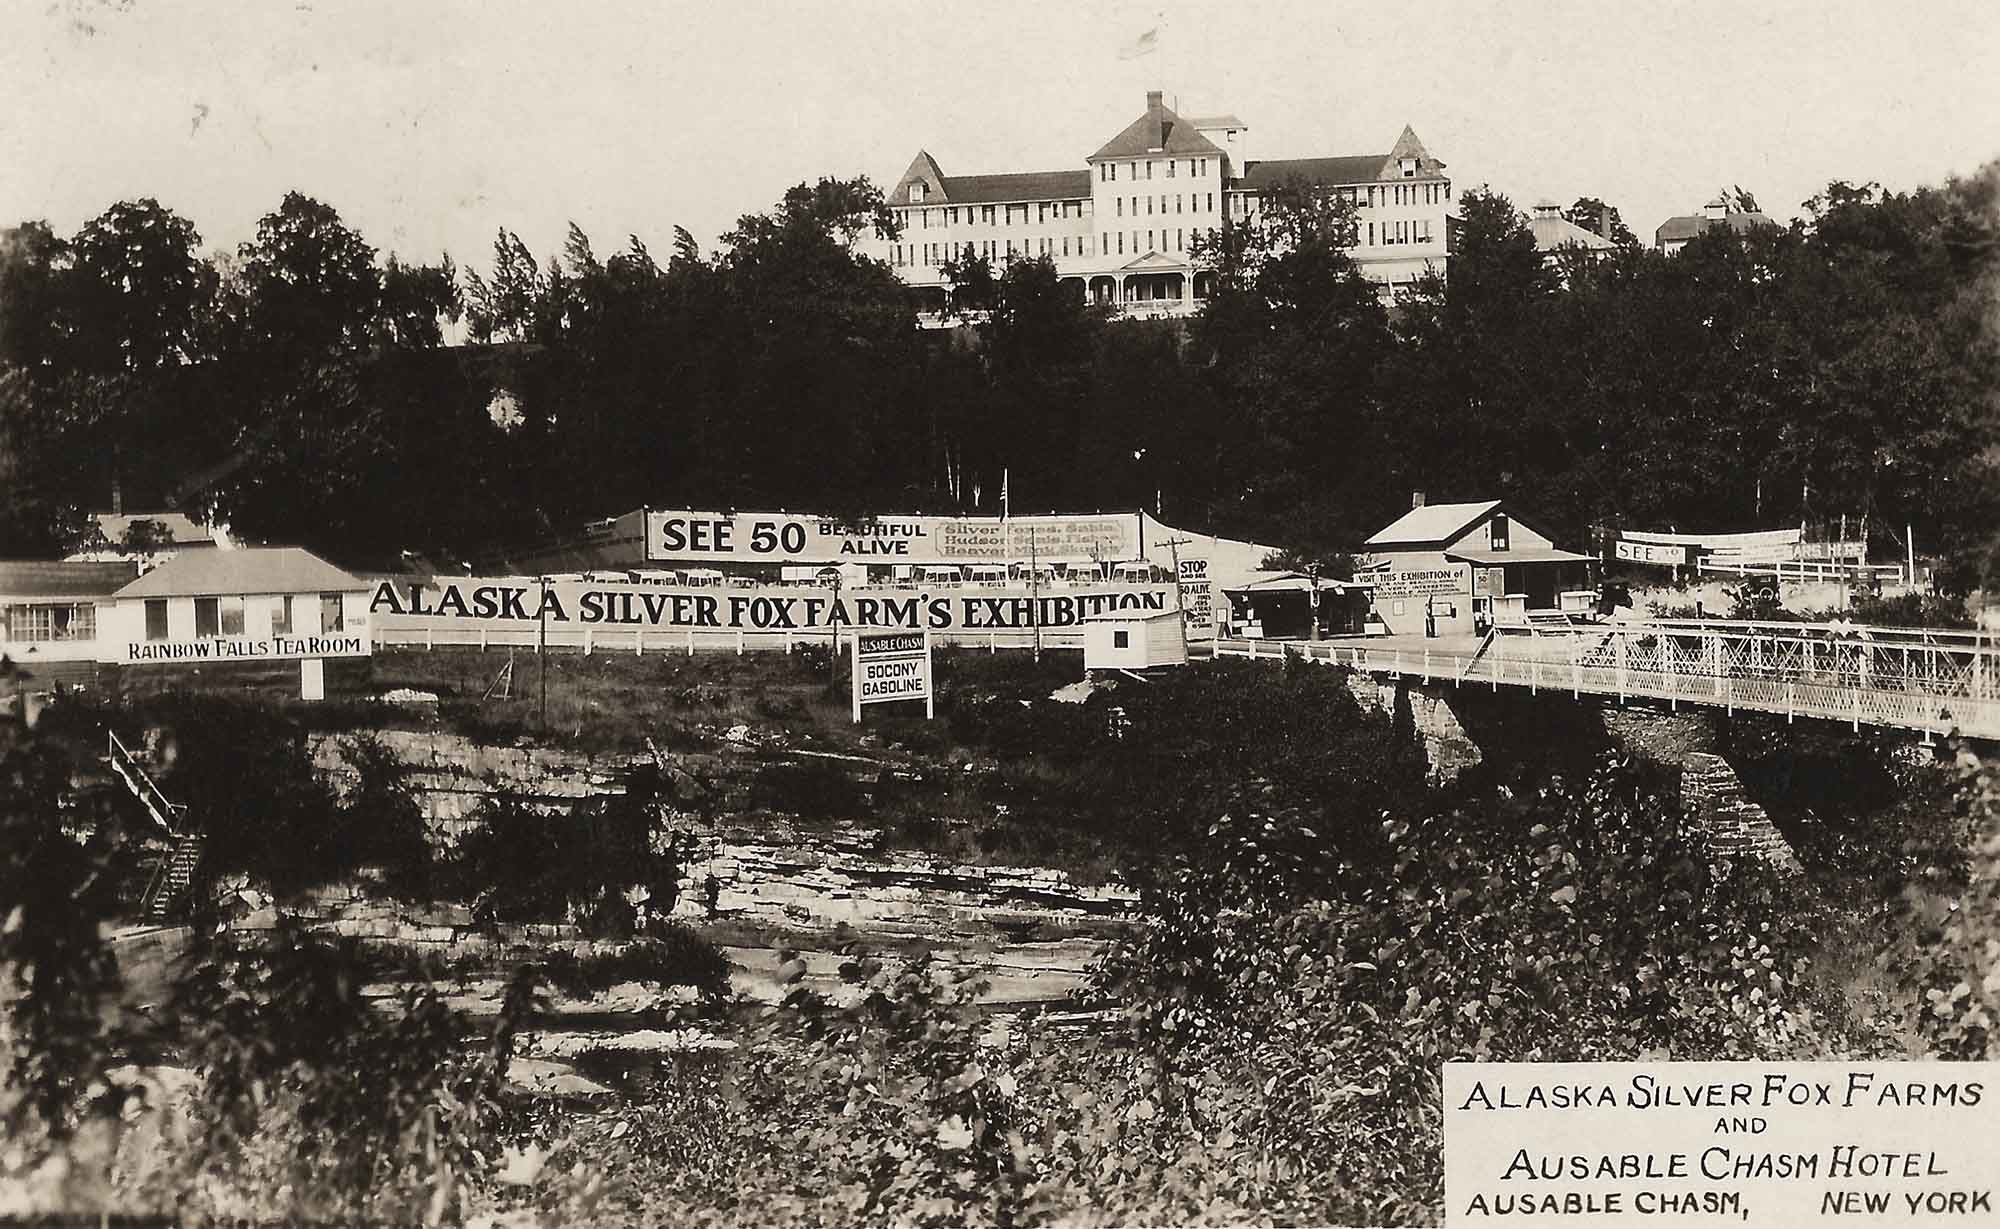 Exterior Of The Alaska Silver Fox Farms With Ausable Chasm